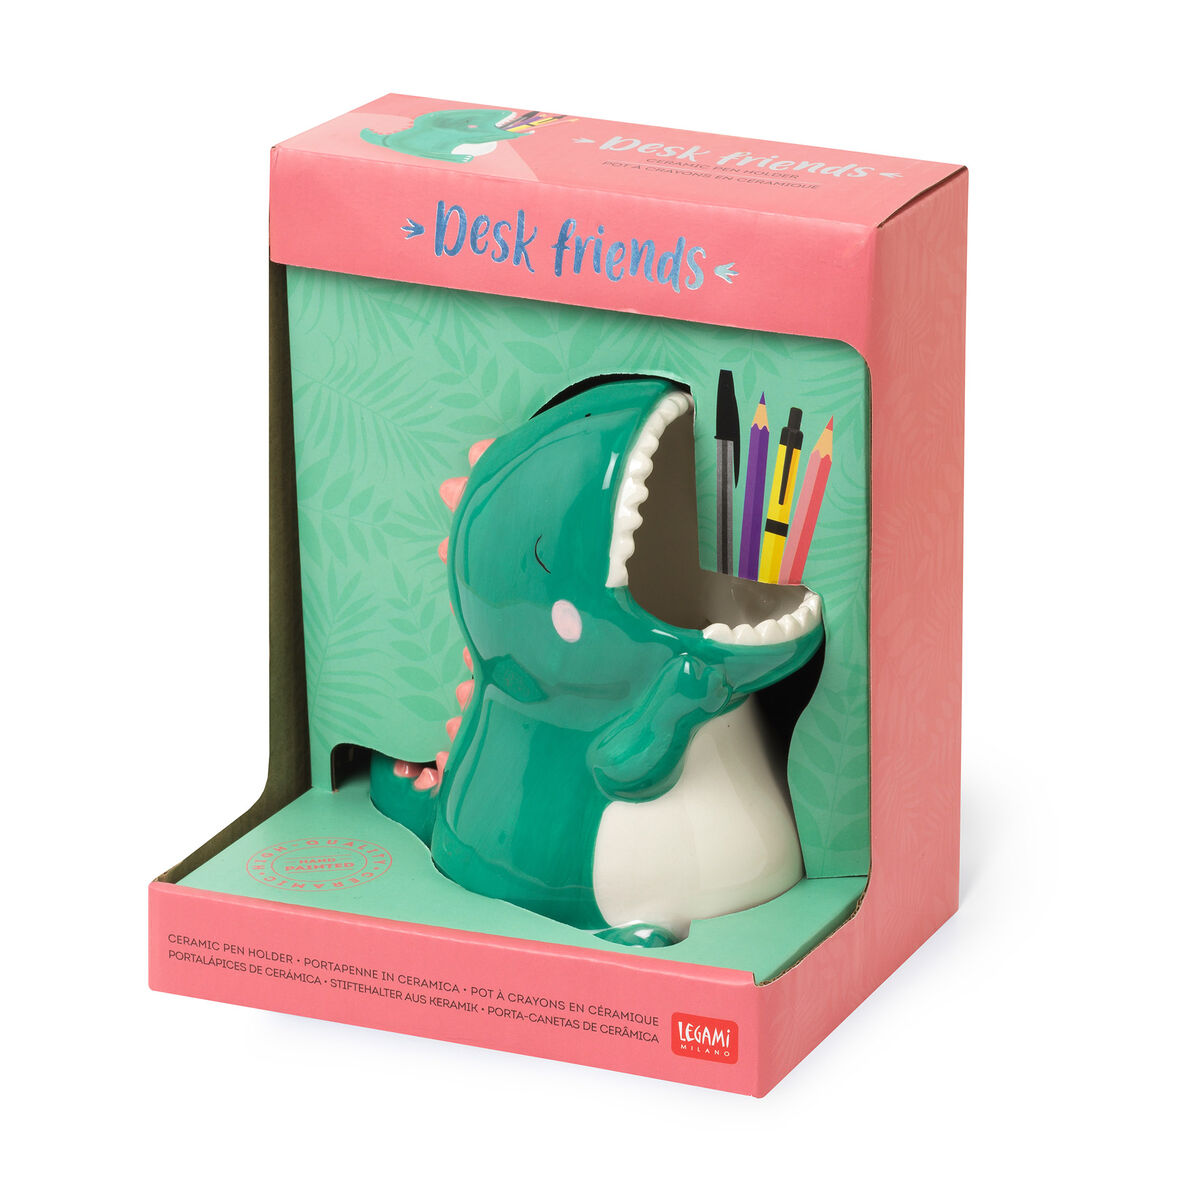 Legami Ceramic Desk Friends - Dinosaur